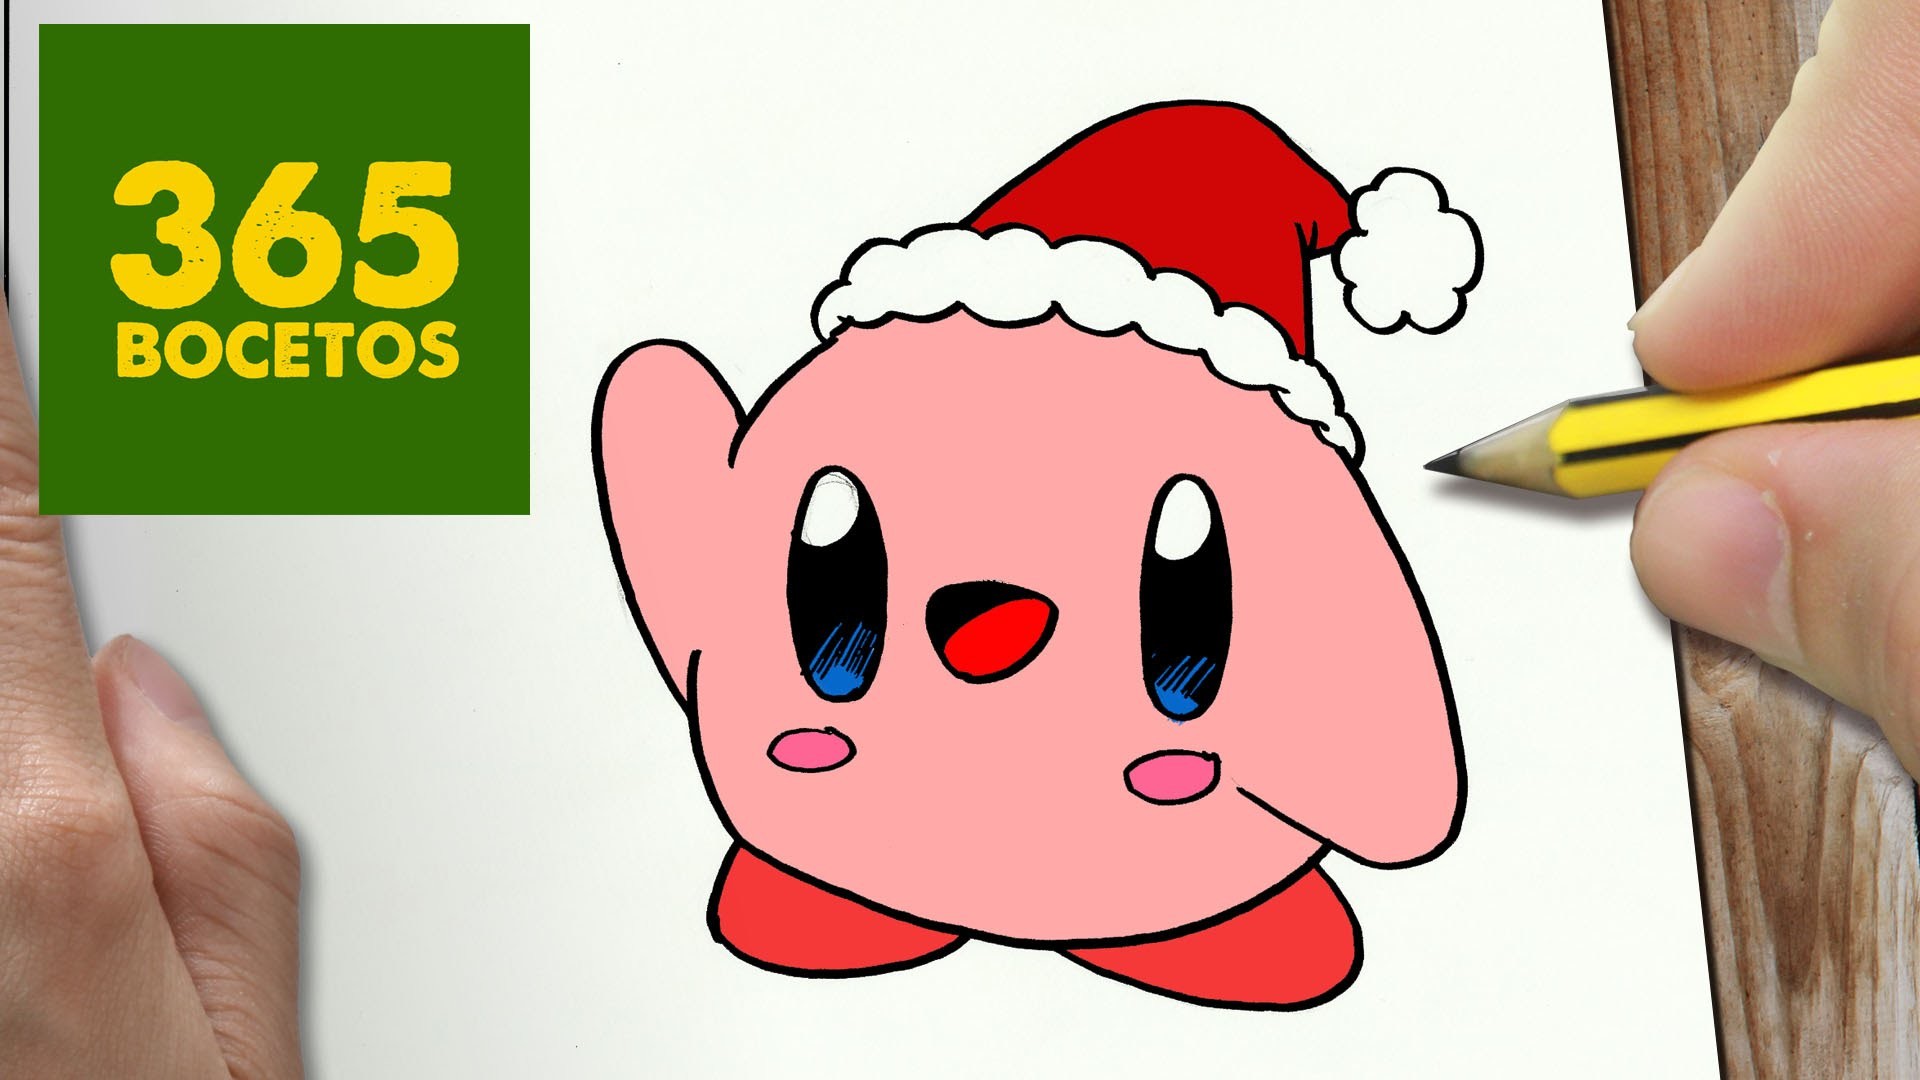 COMO DIBUJAR UN KIRBY PARA NAVIDAD PASO A PASO: Dibujos kawaii navideños - How to draw a Kirby